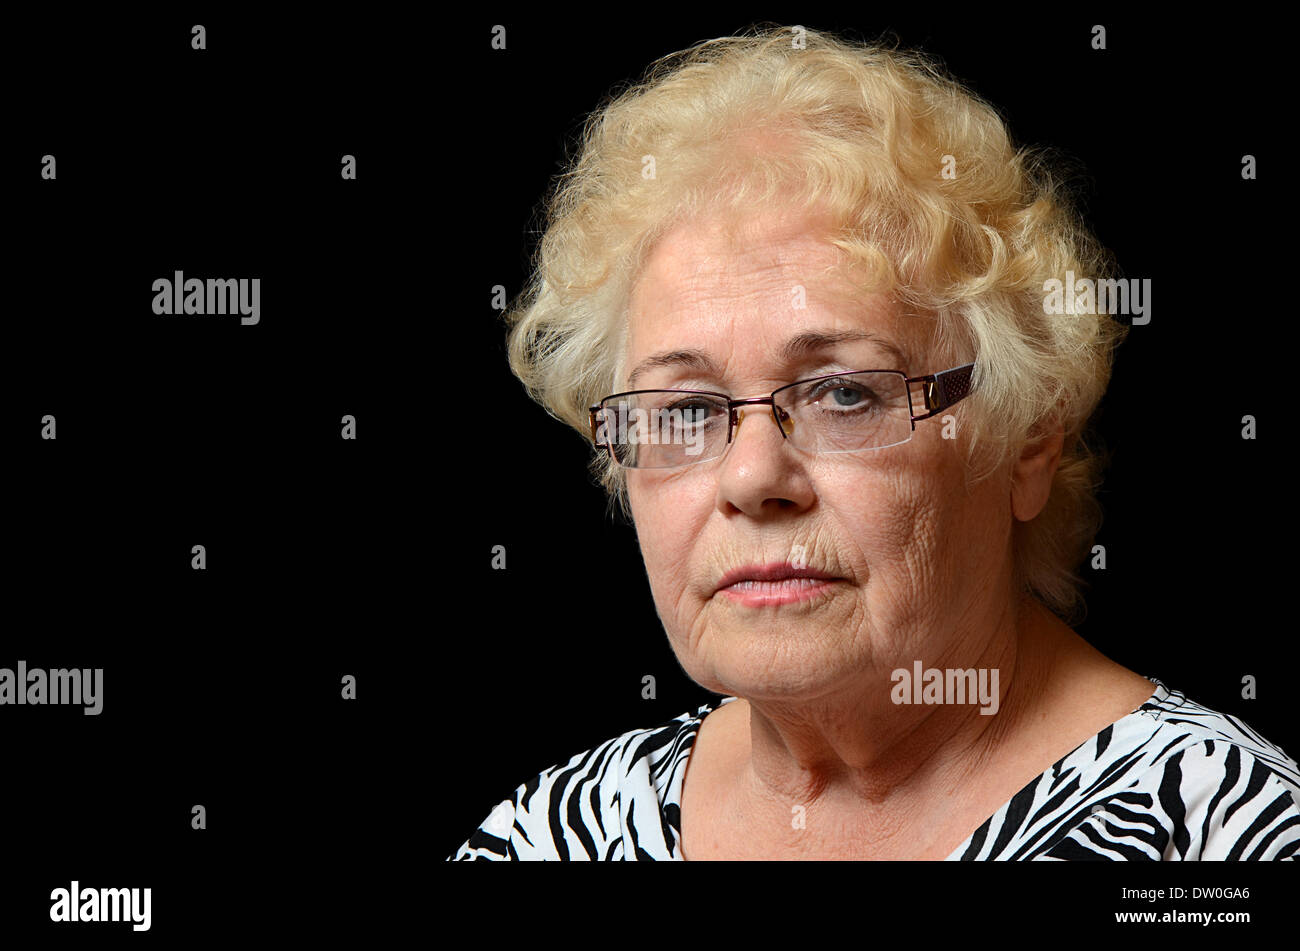 The elderly woman on black background Stock Photo